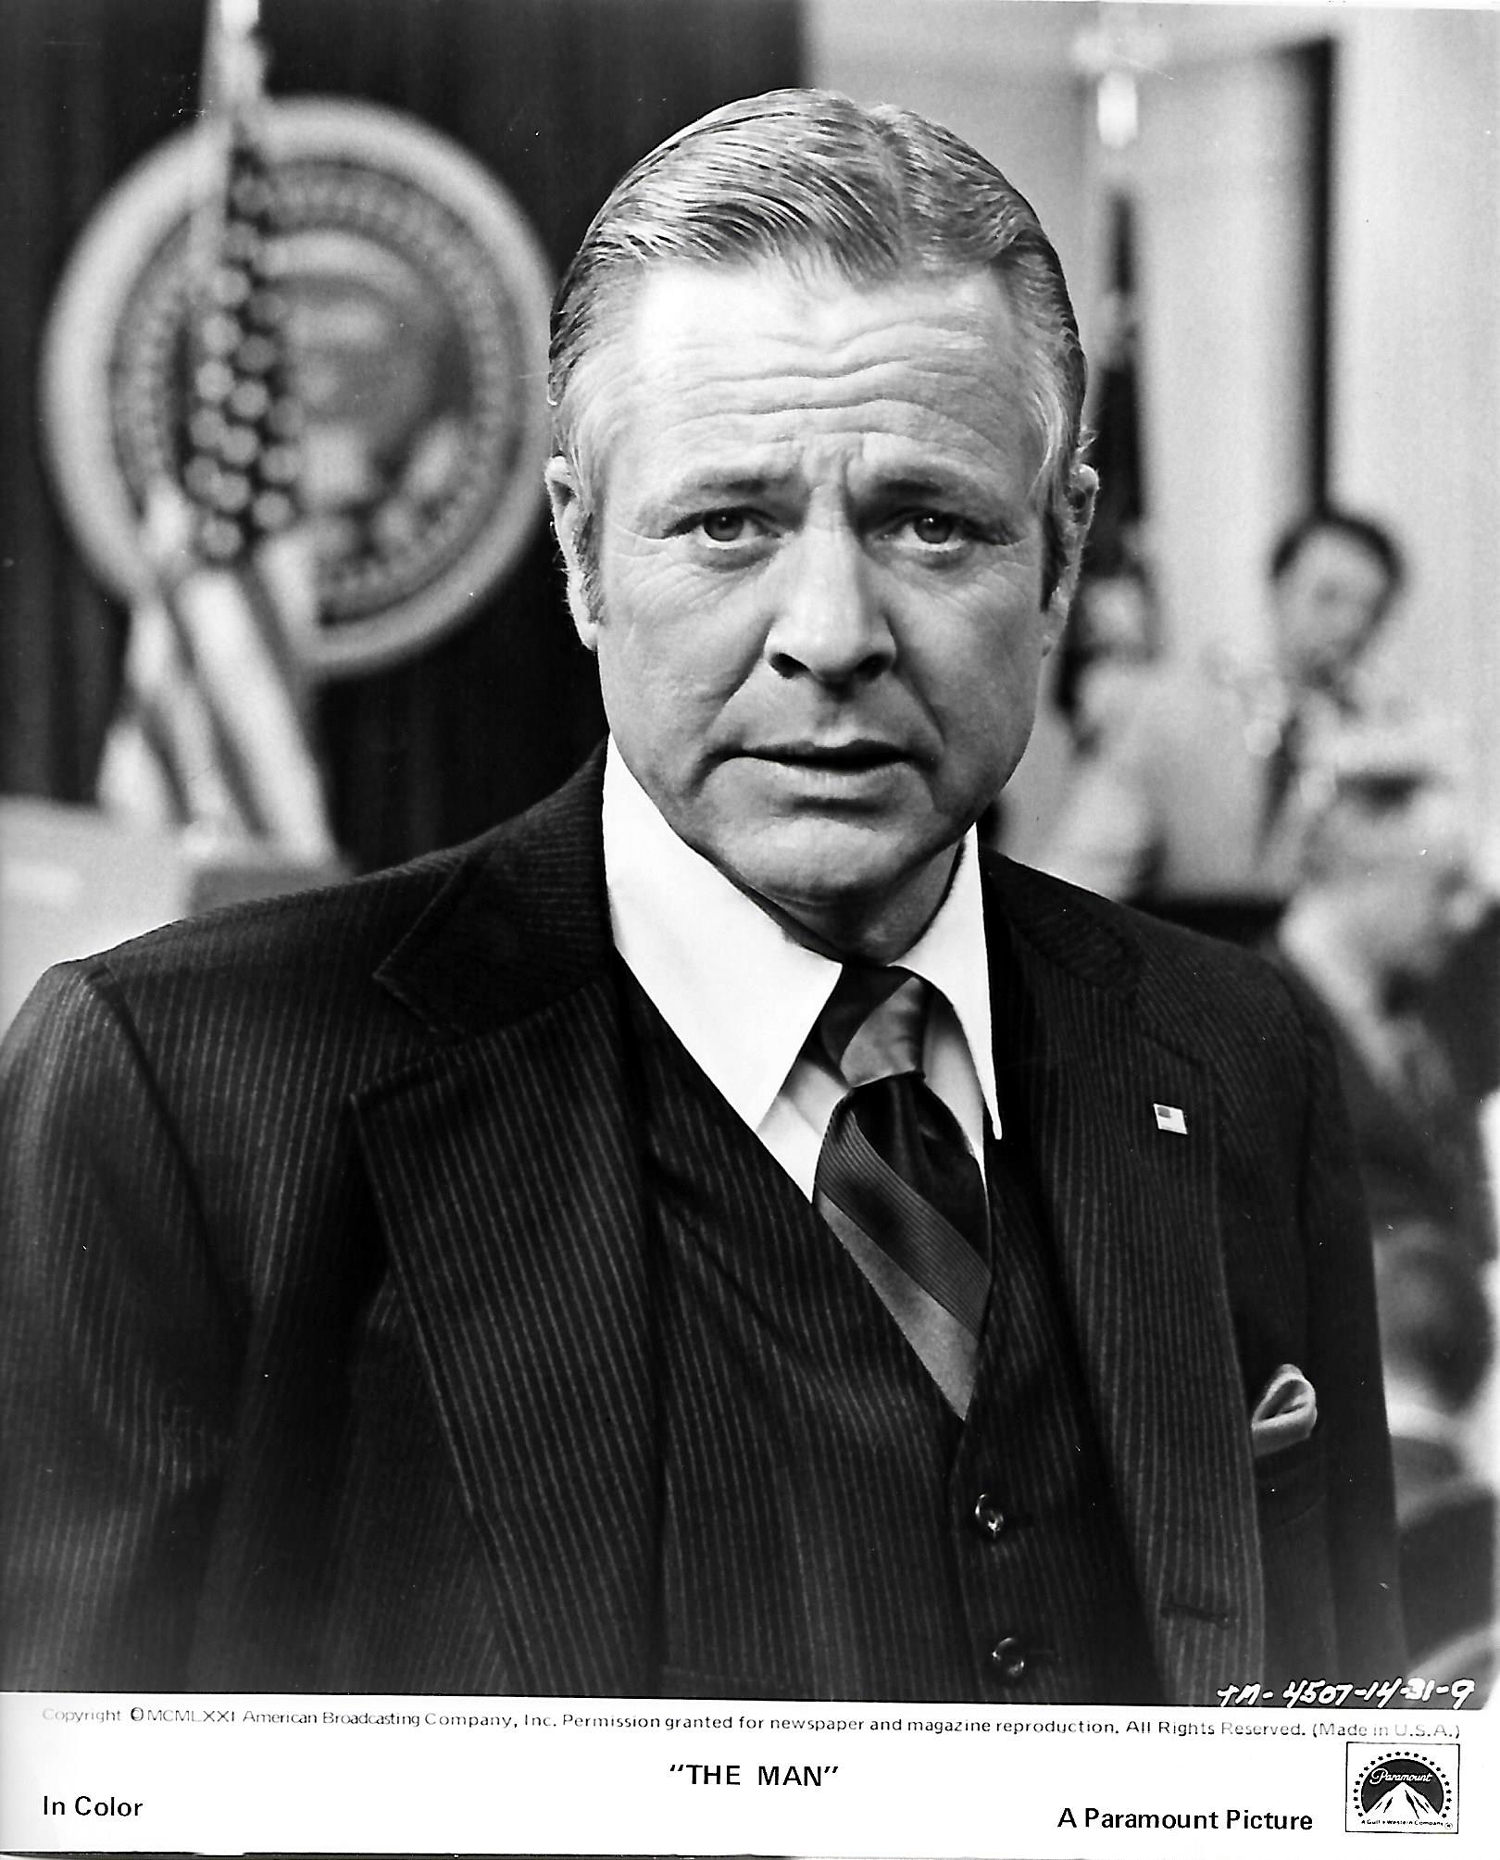  William Windom, as “Arthur Eaton”, Secretary of State 